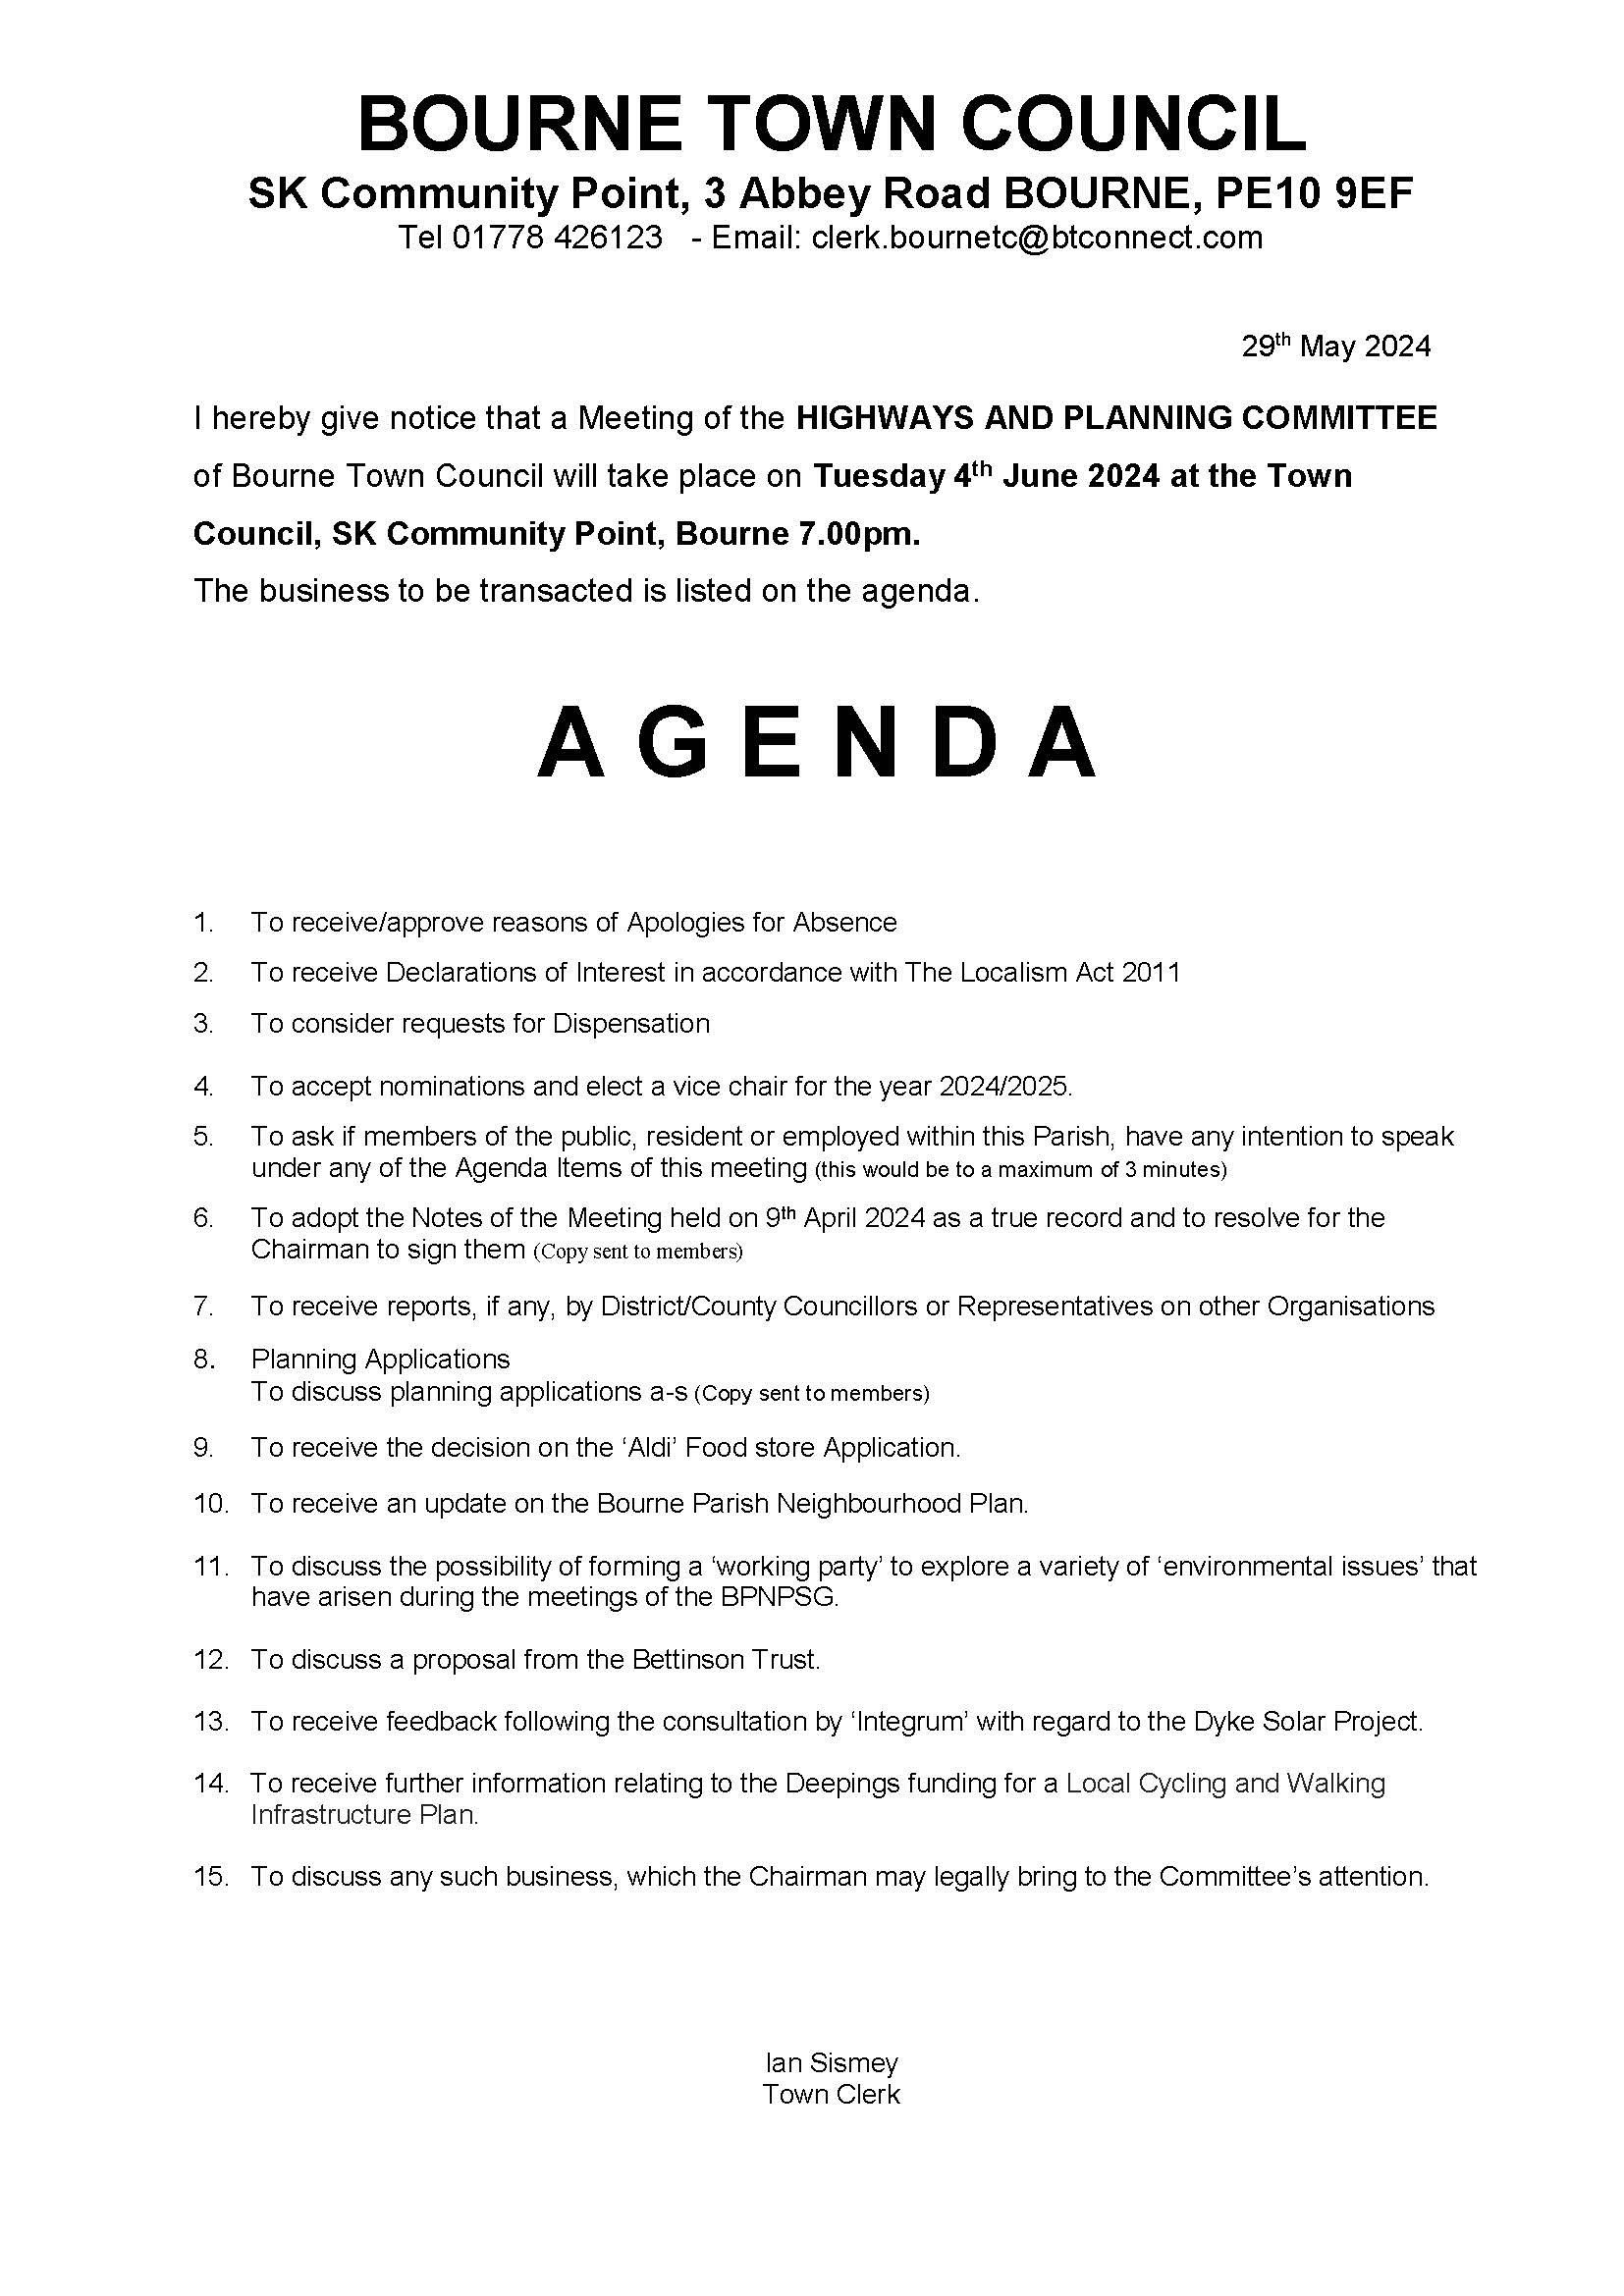 Agenda and Notice - Highways & Planning Meeting 4th June 2024